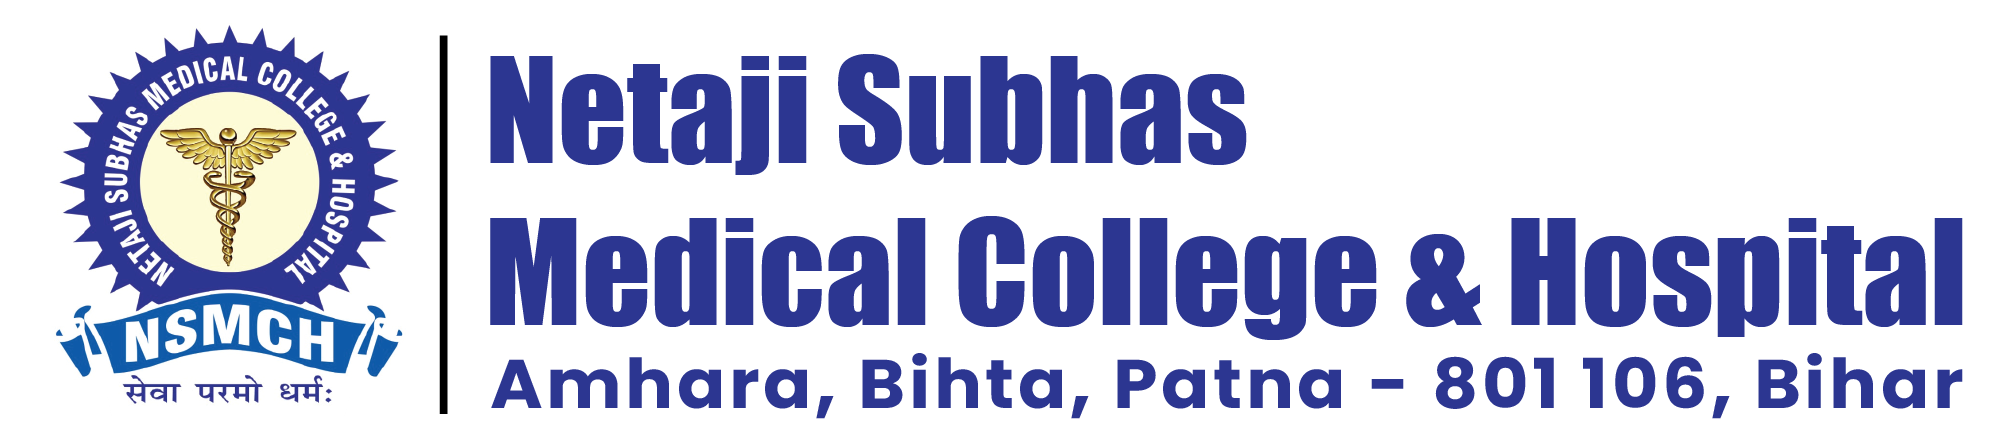 Netaji Subhas Medical College and hospital